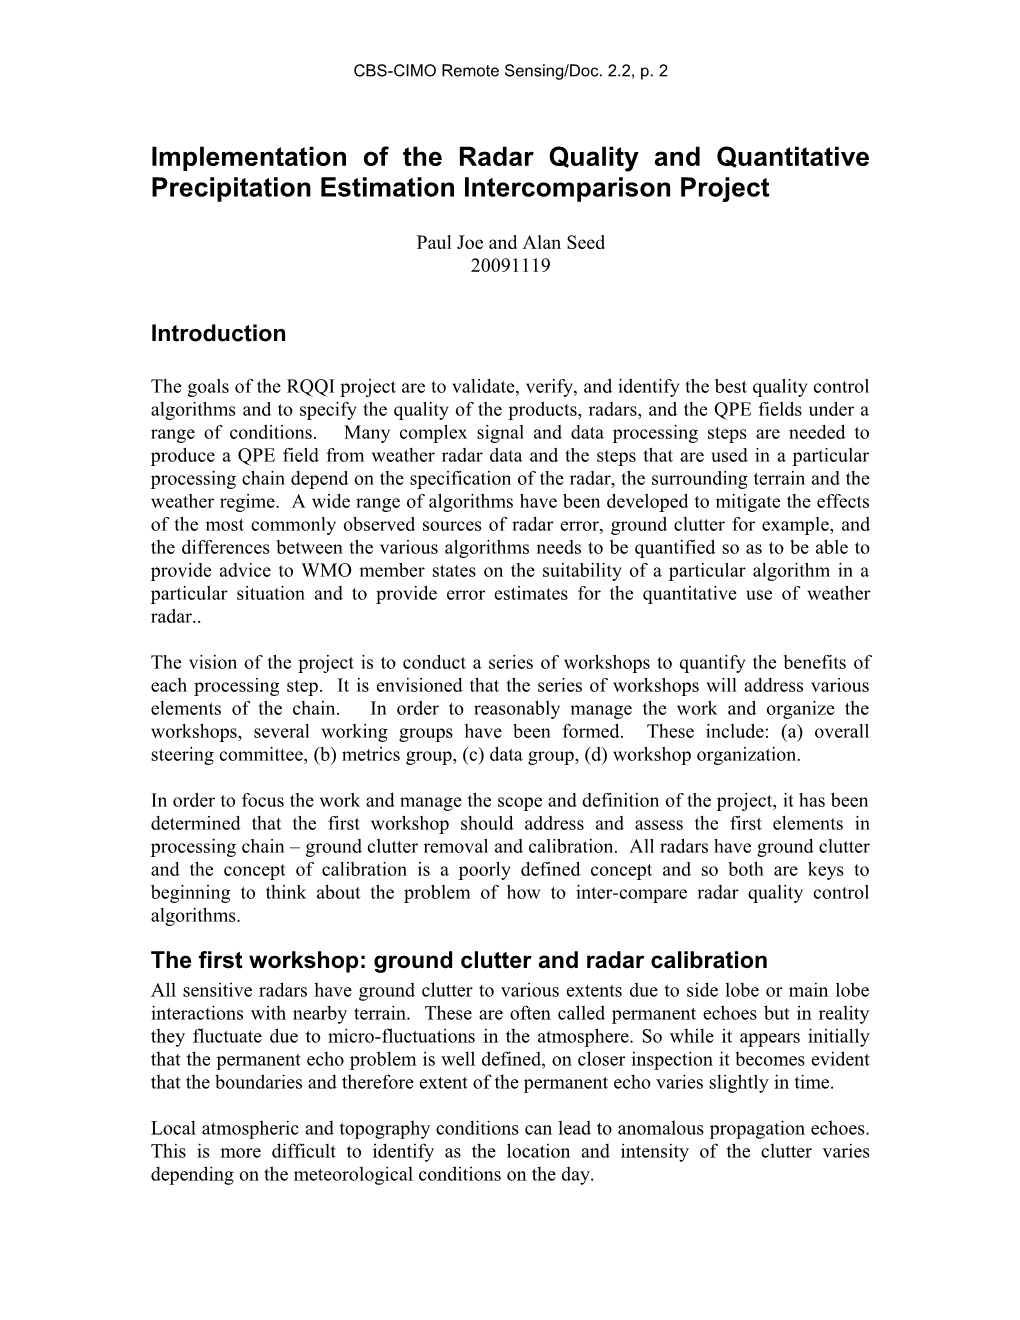 Implementation of the Radar Quality and Quantitative Precipitation Estimation Intercomparison